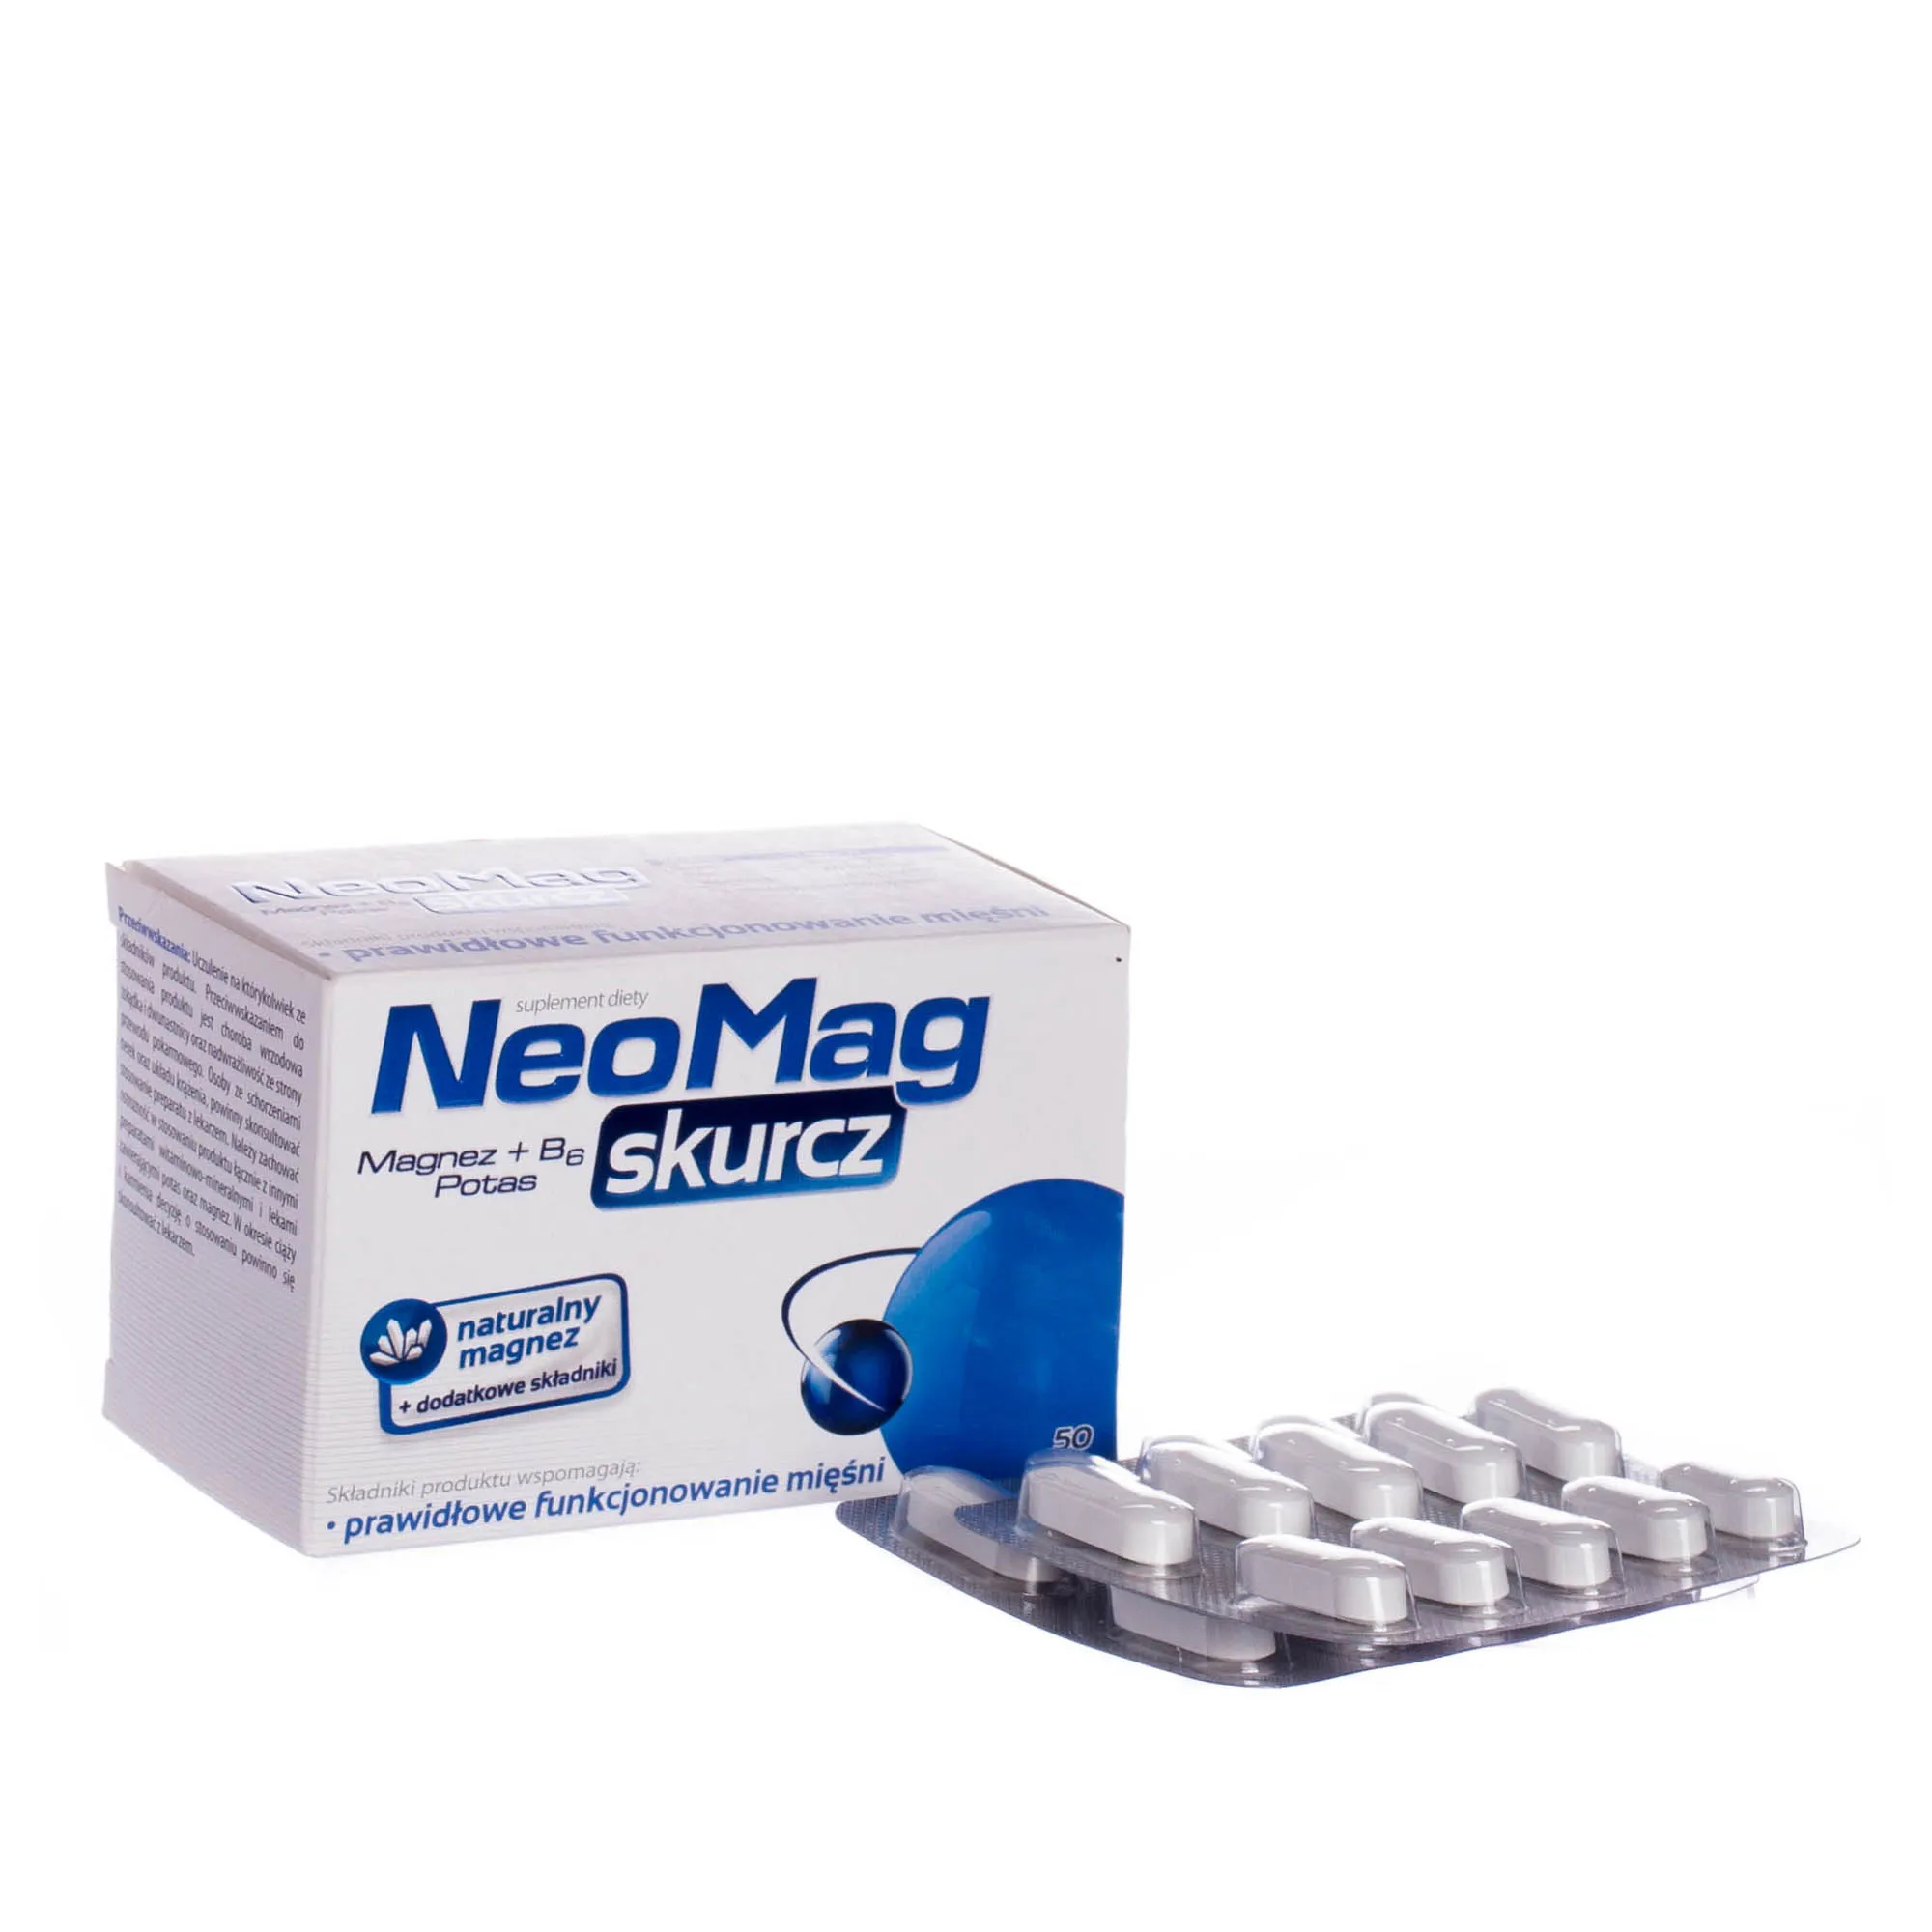 NeoMag skurcz - suplement diety bogaty w magnez, witaminę B6 i Potas, 50 tabletek.